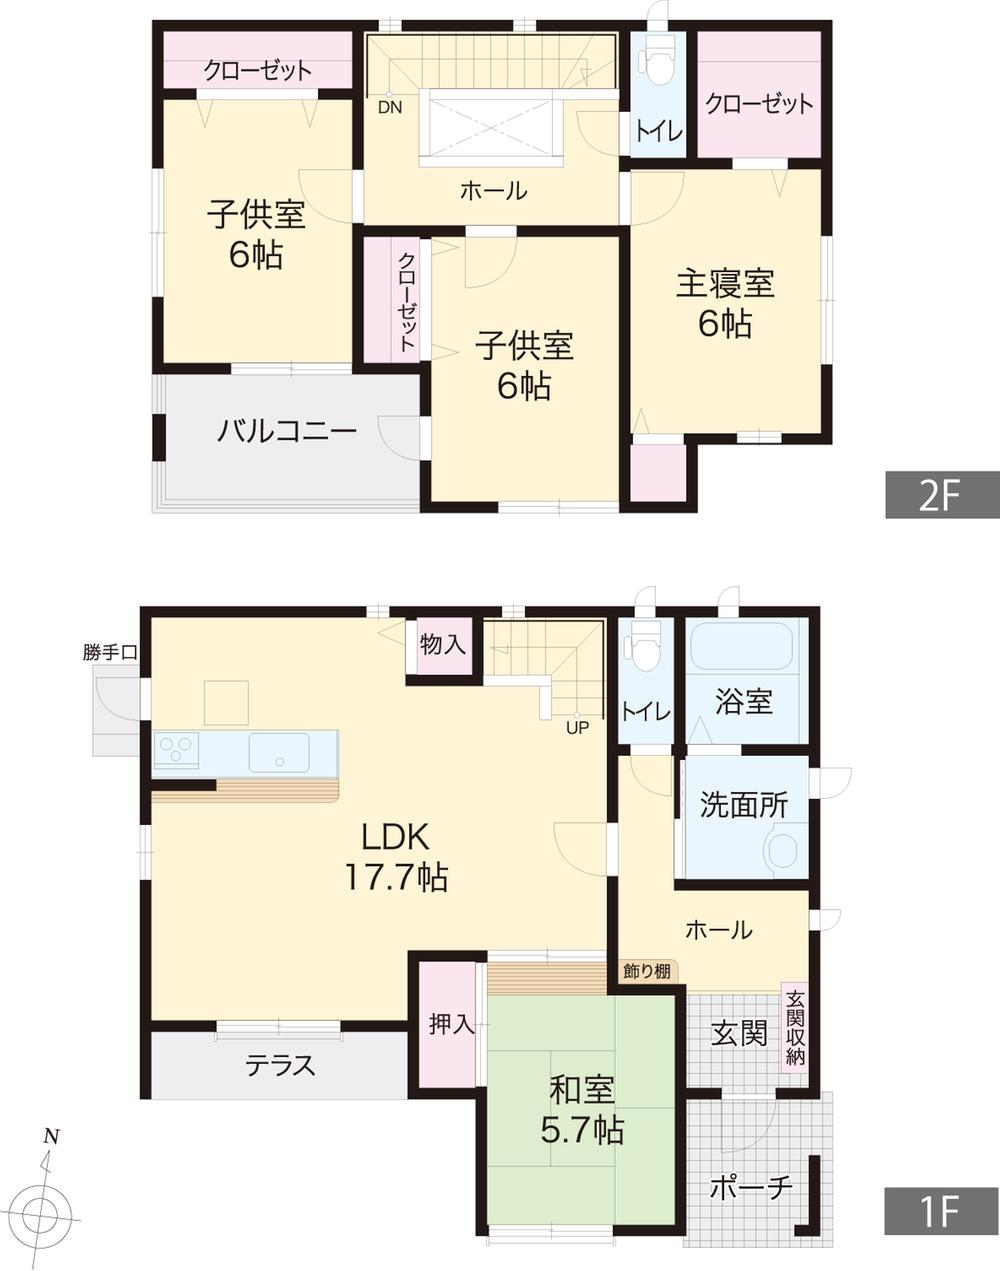 Floor plan. (No. 17 locations), Price 24,800,000 yen, 4LDK, Land area 158.69 sq m , Building area 107.64 sq m